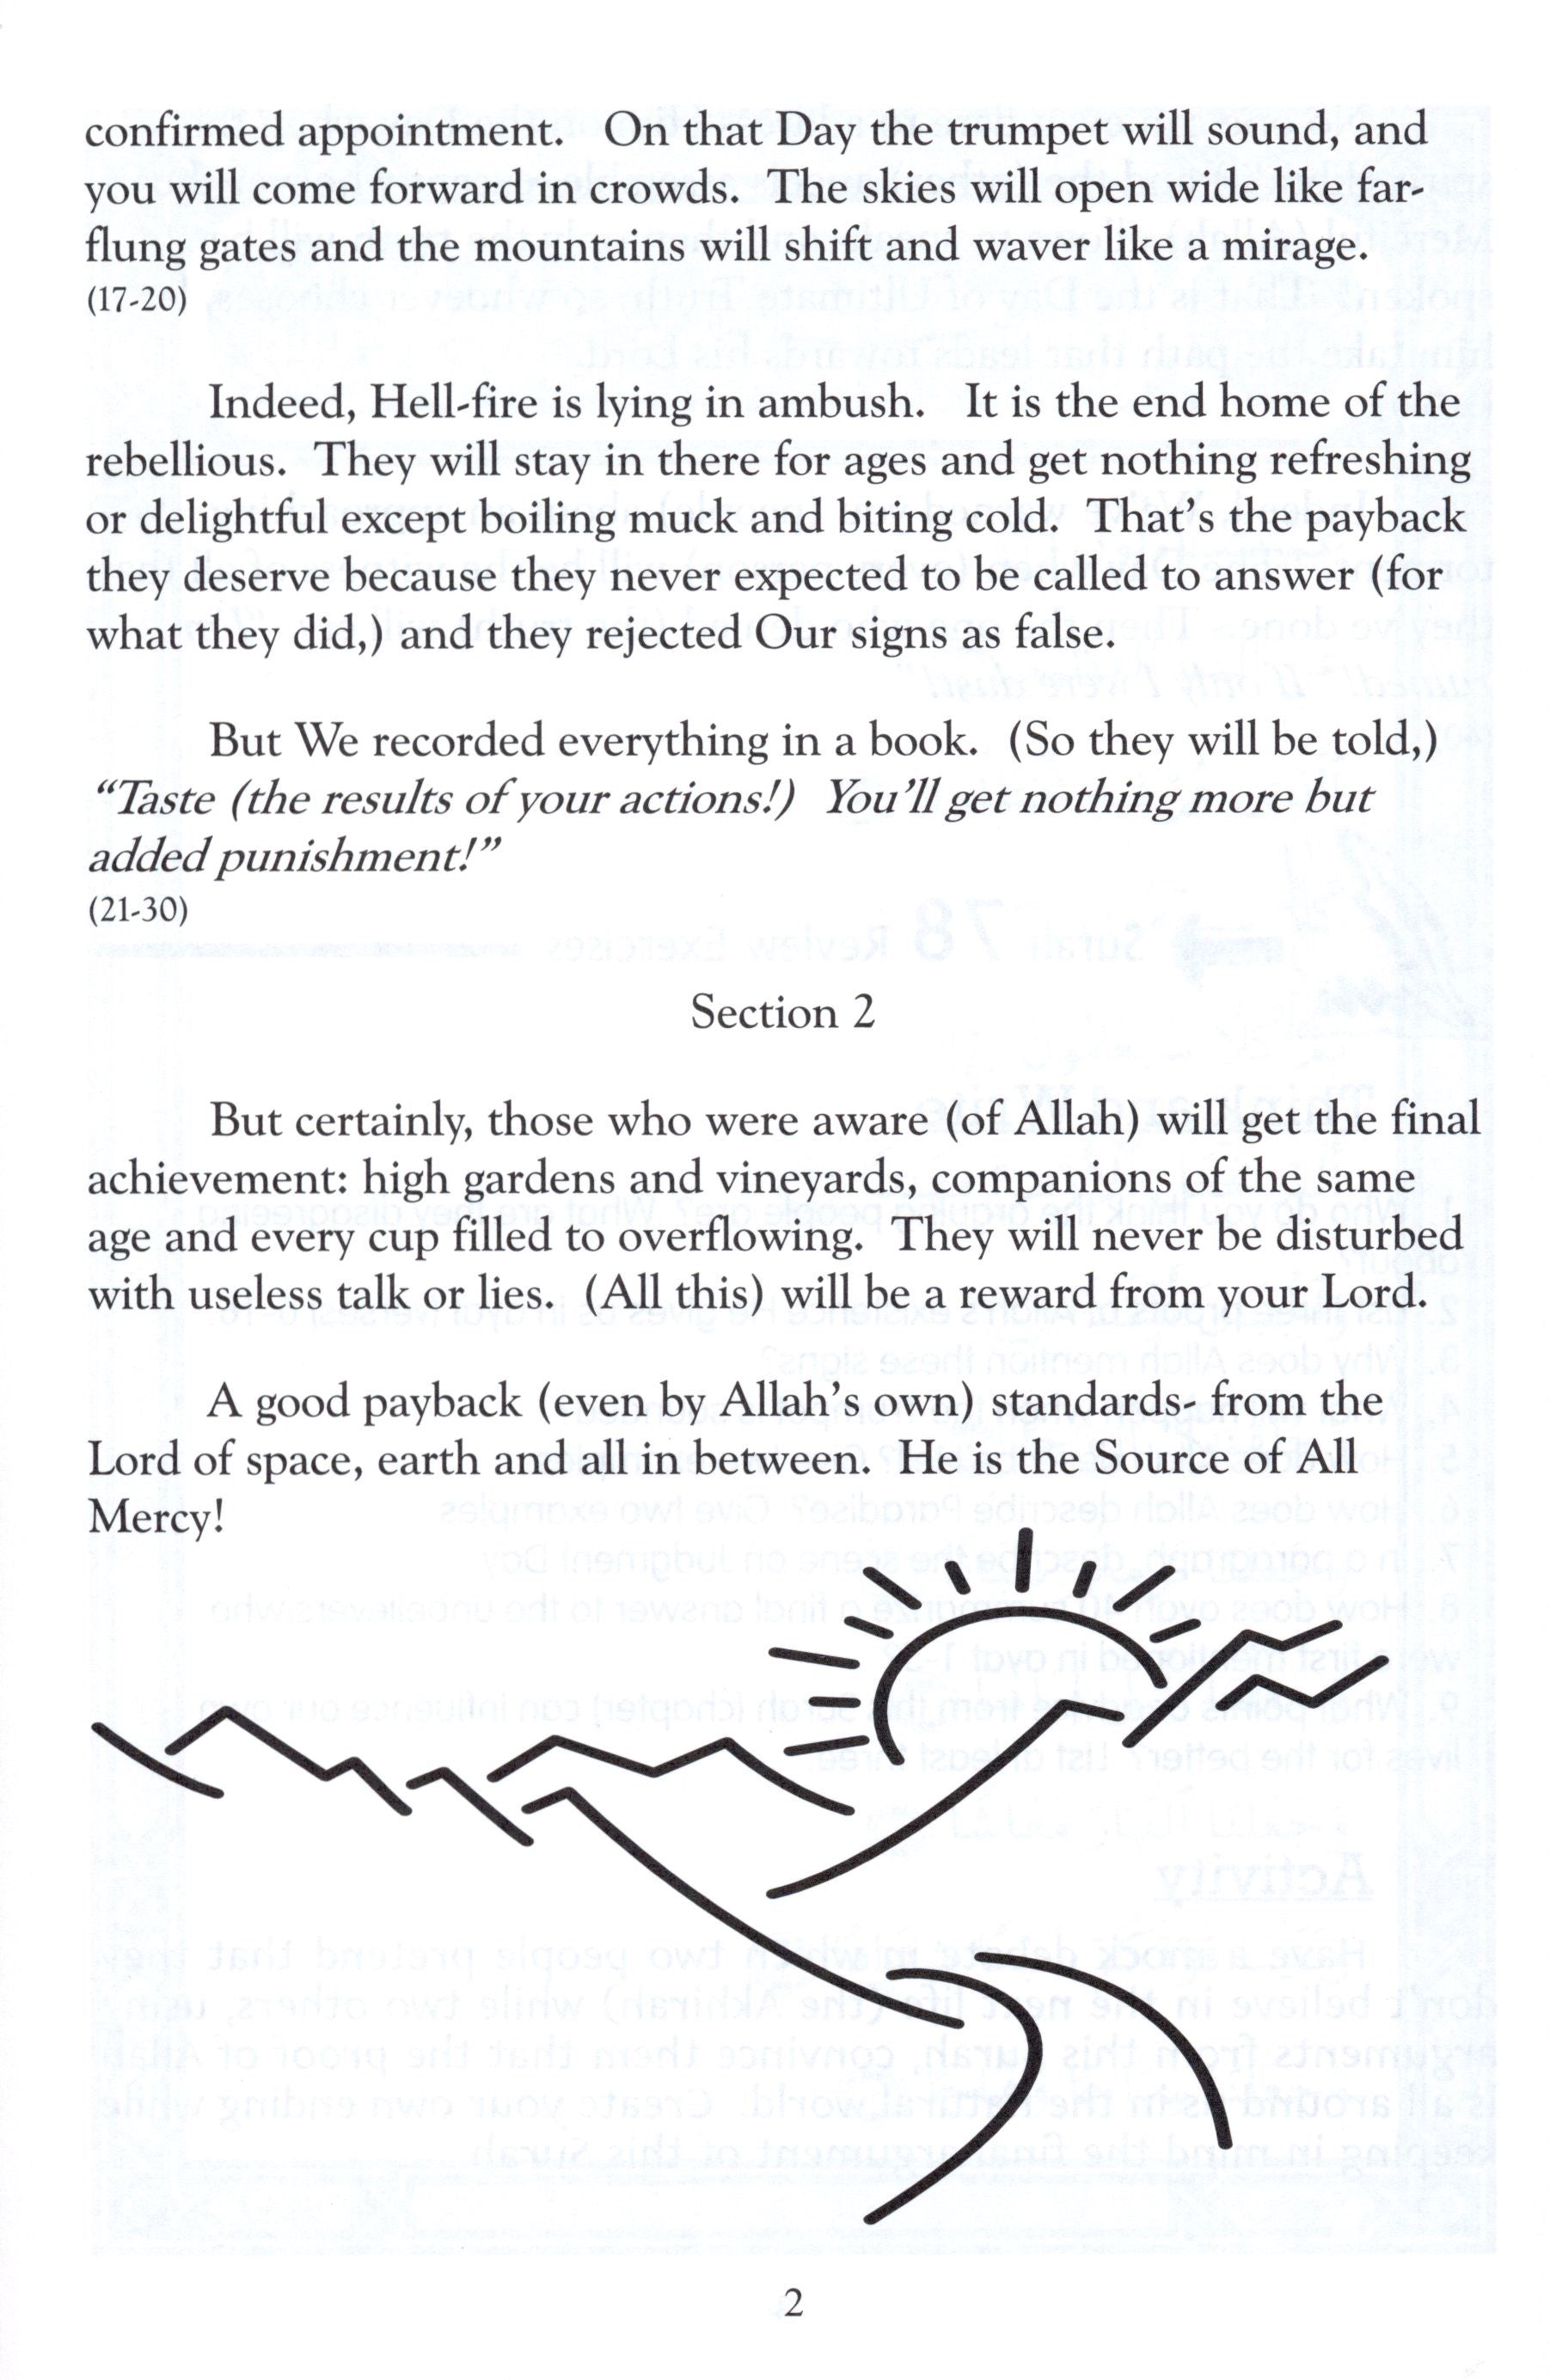 The Holy Qur'an for School Children (Juz 'Amma - Part 30)